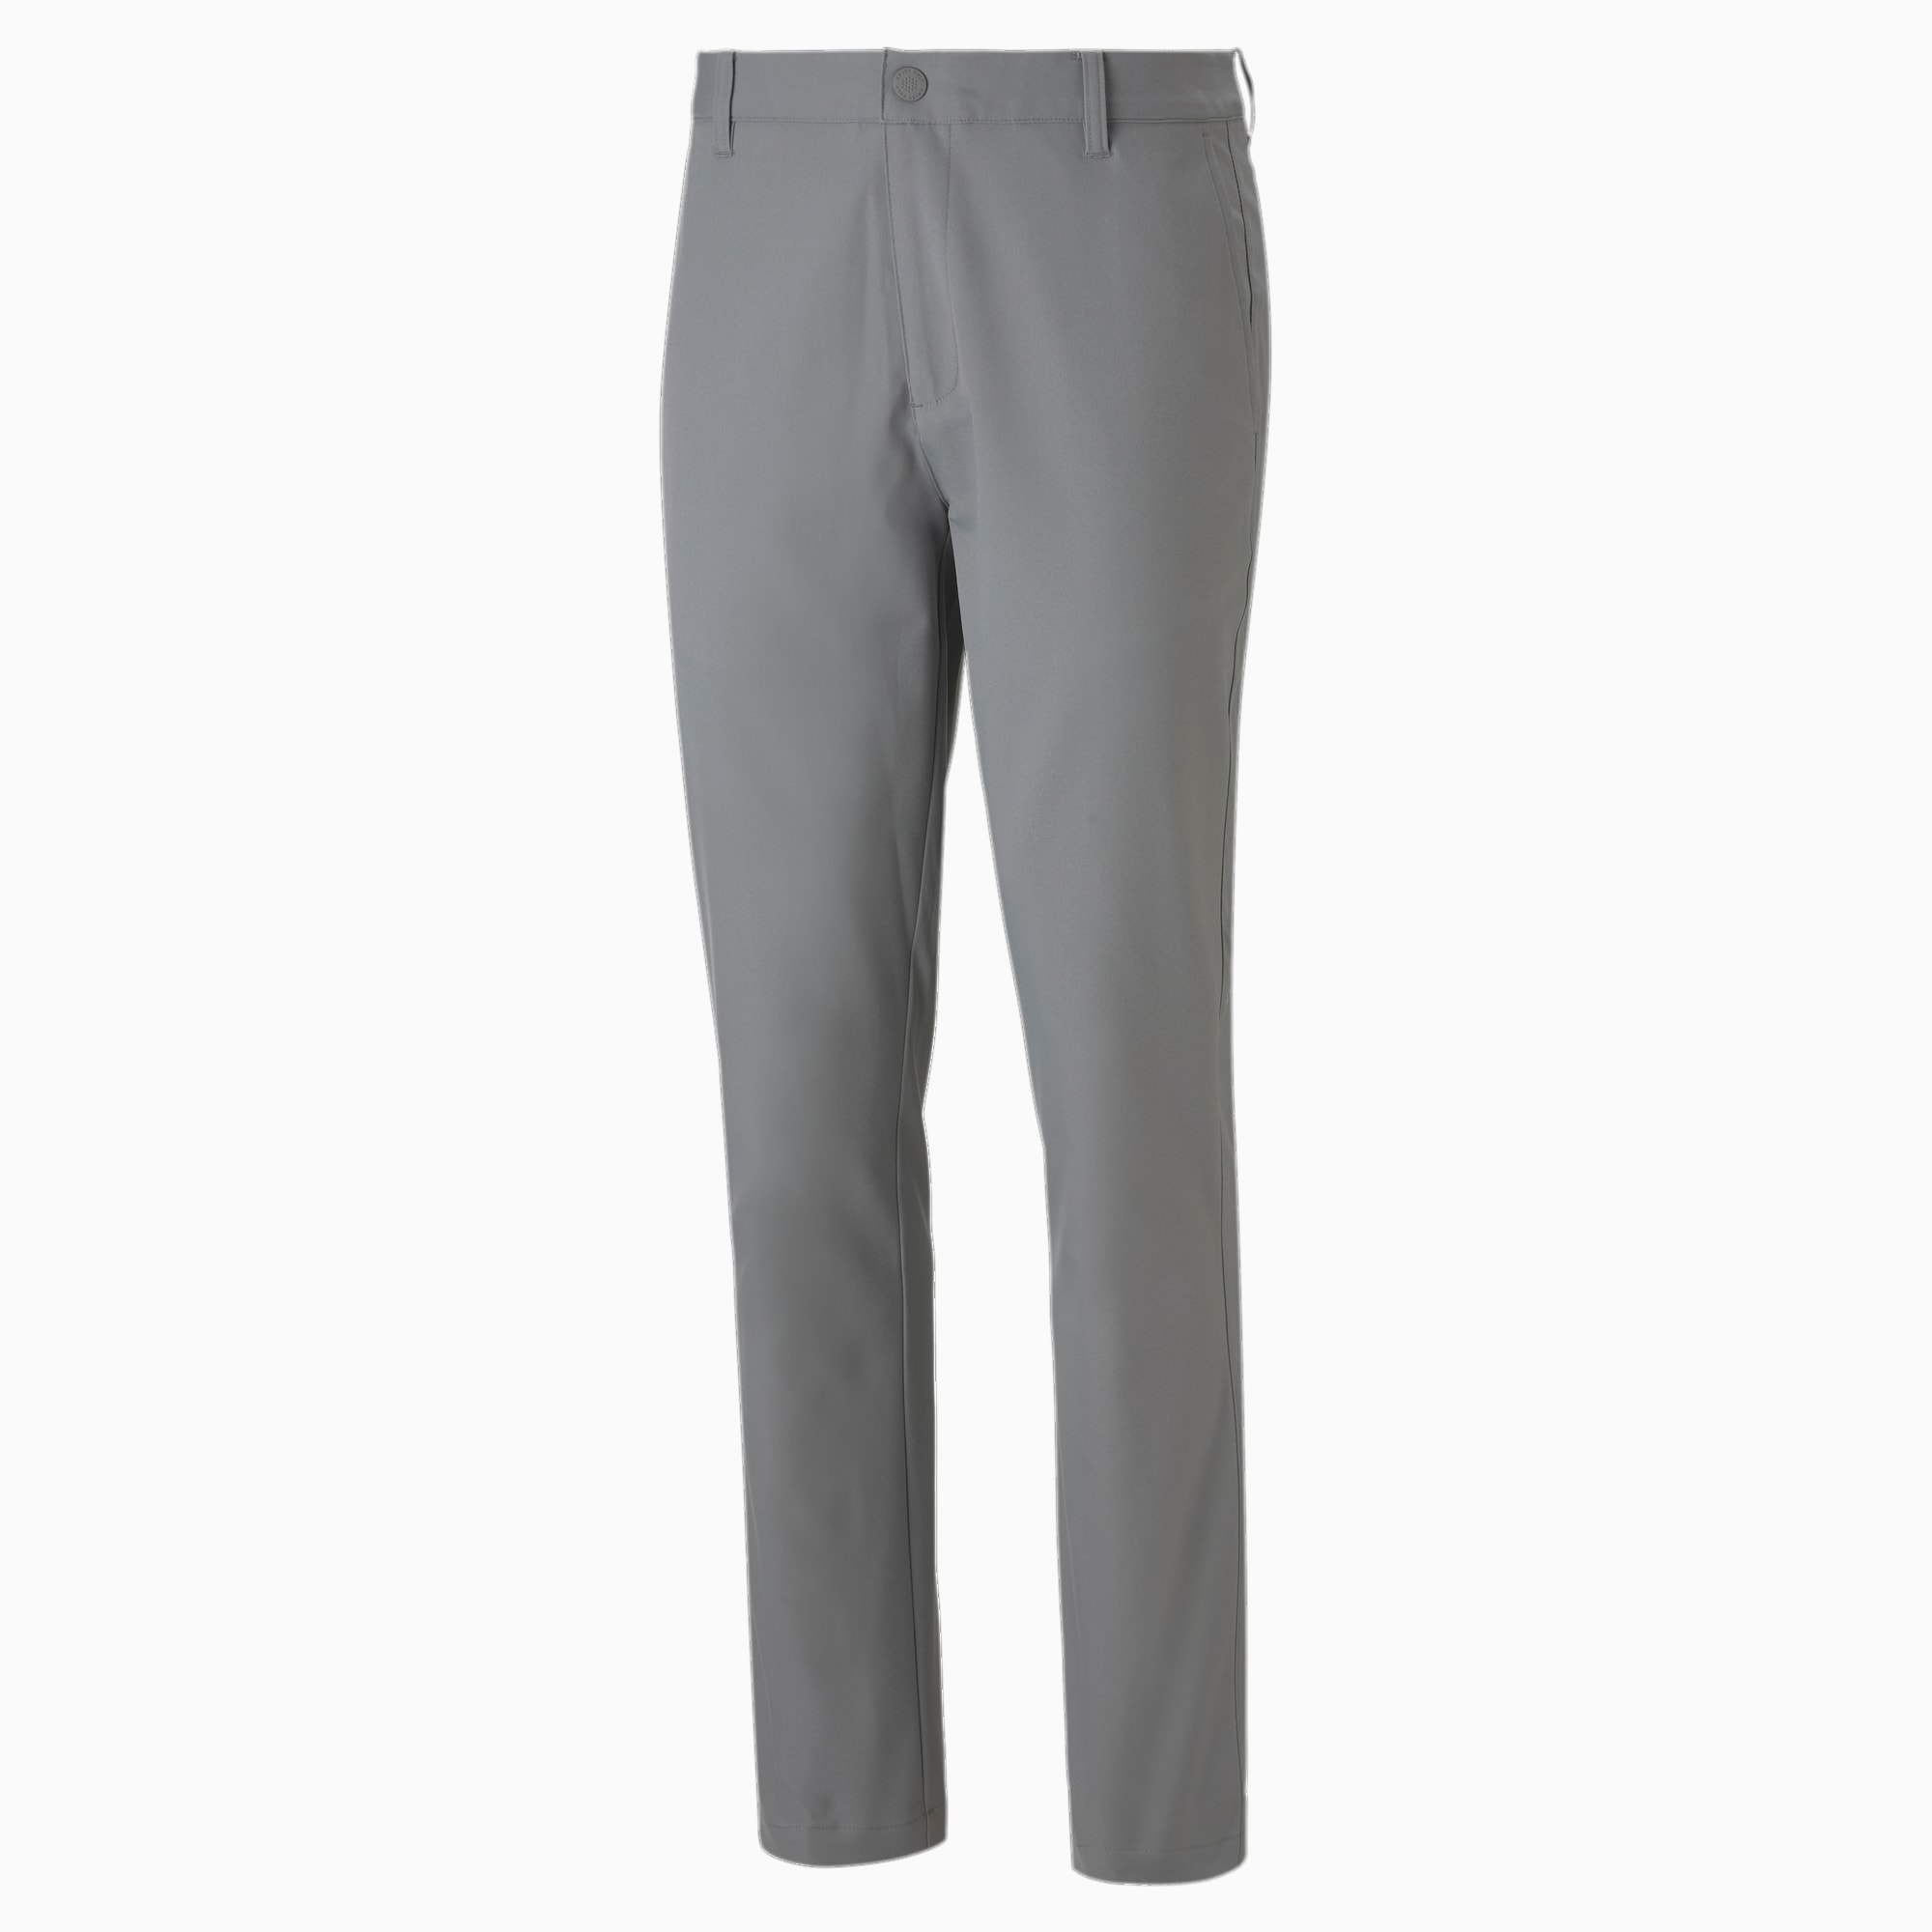 PUMA Dealer Tailored Golf Pants Men, Slate Sky, Size 35/30, Clothing